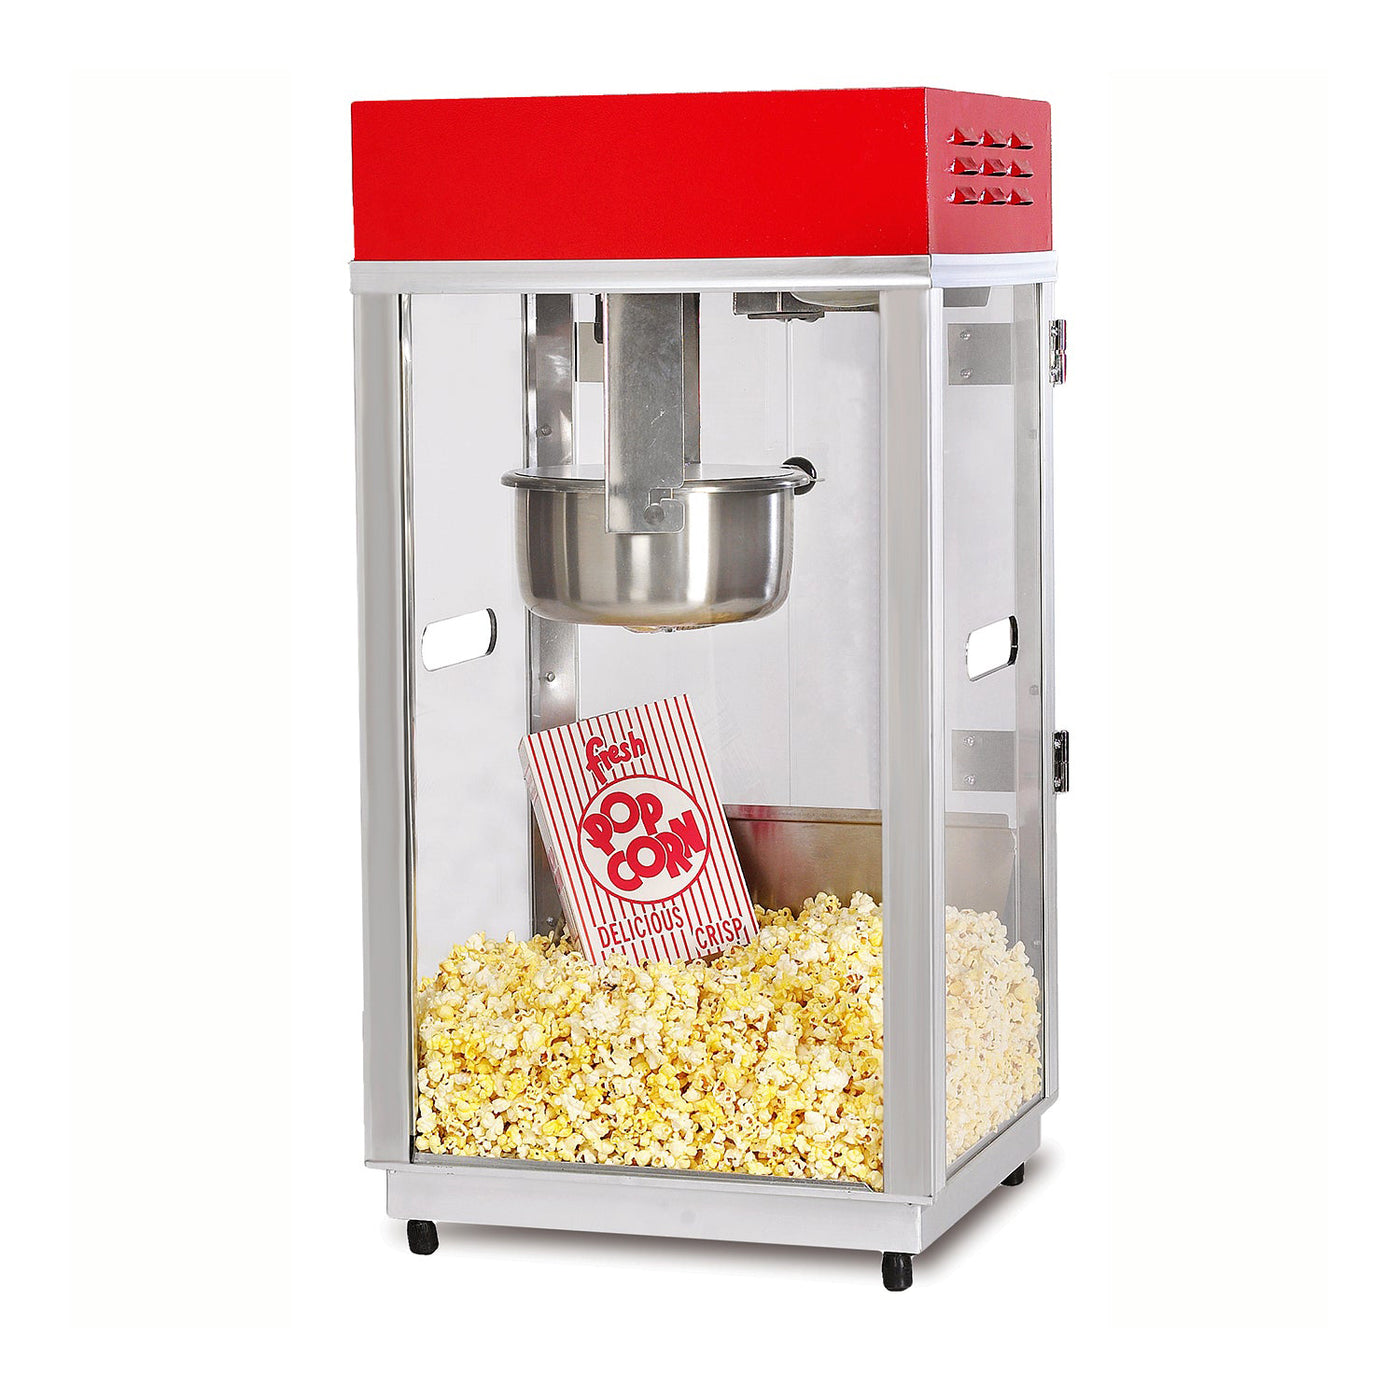 Popcorn Machine Rental